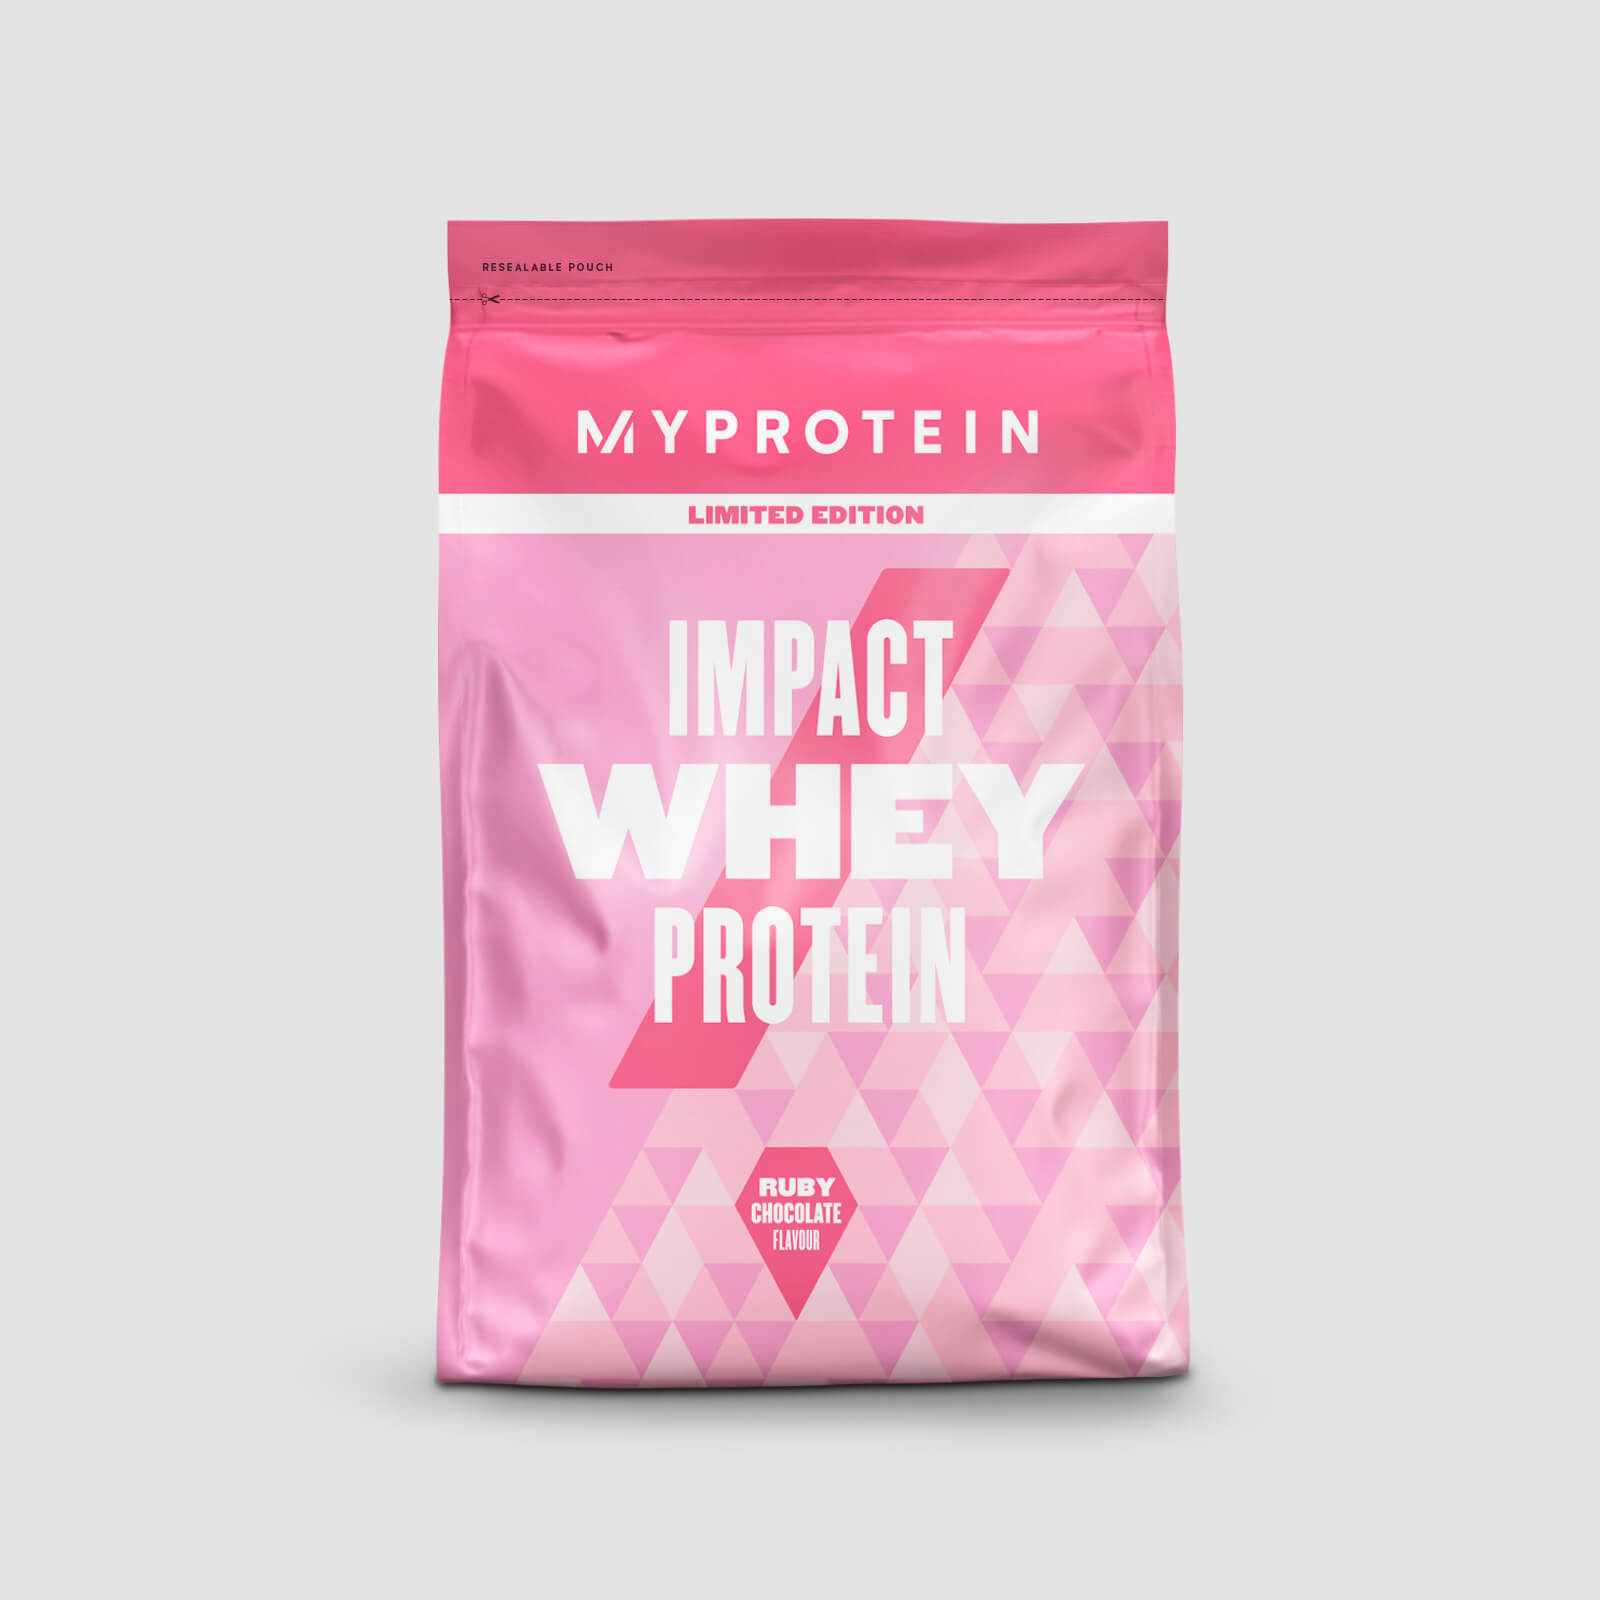 Myprotein Impact Whey Protein - 1kg - Ruby Chocolate